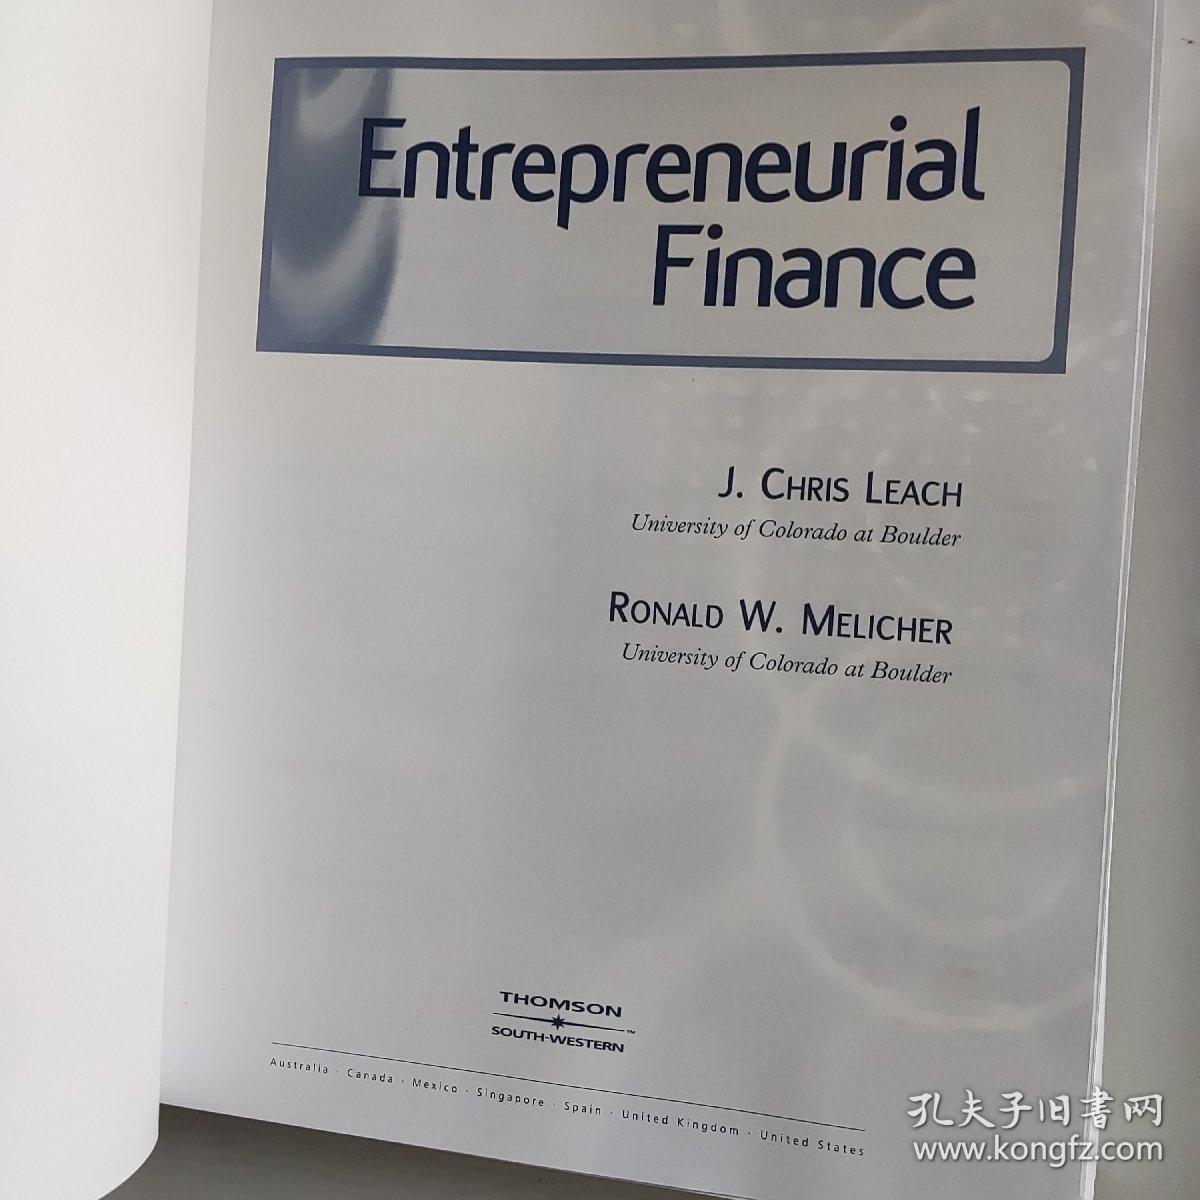 Entrepreneurial FINANCE ( 2nd Edition )   创业金融(第2版)